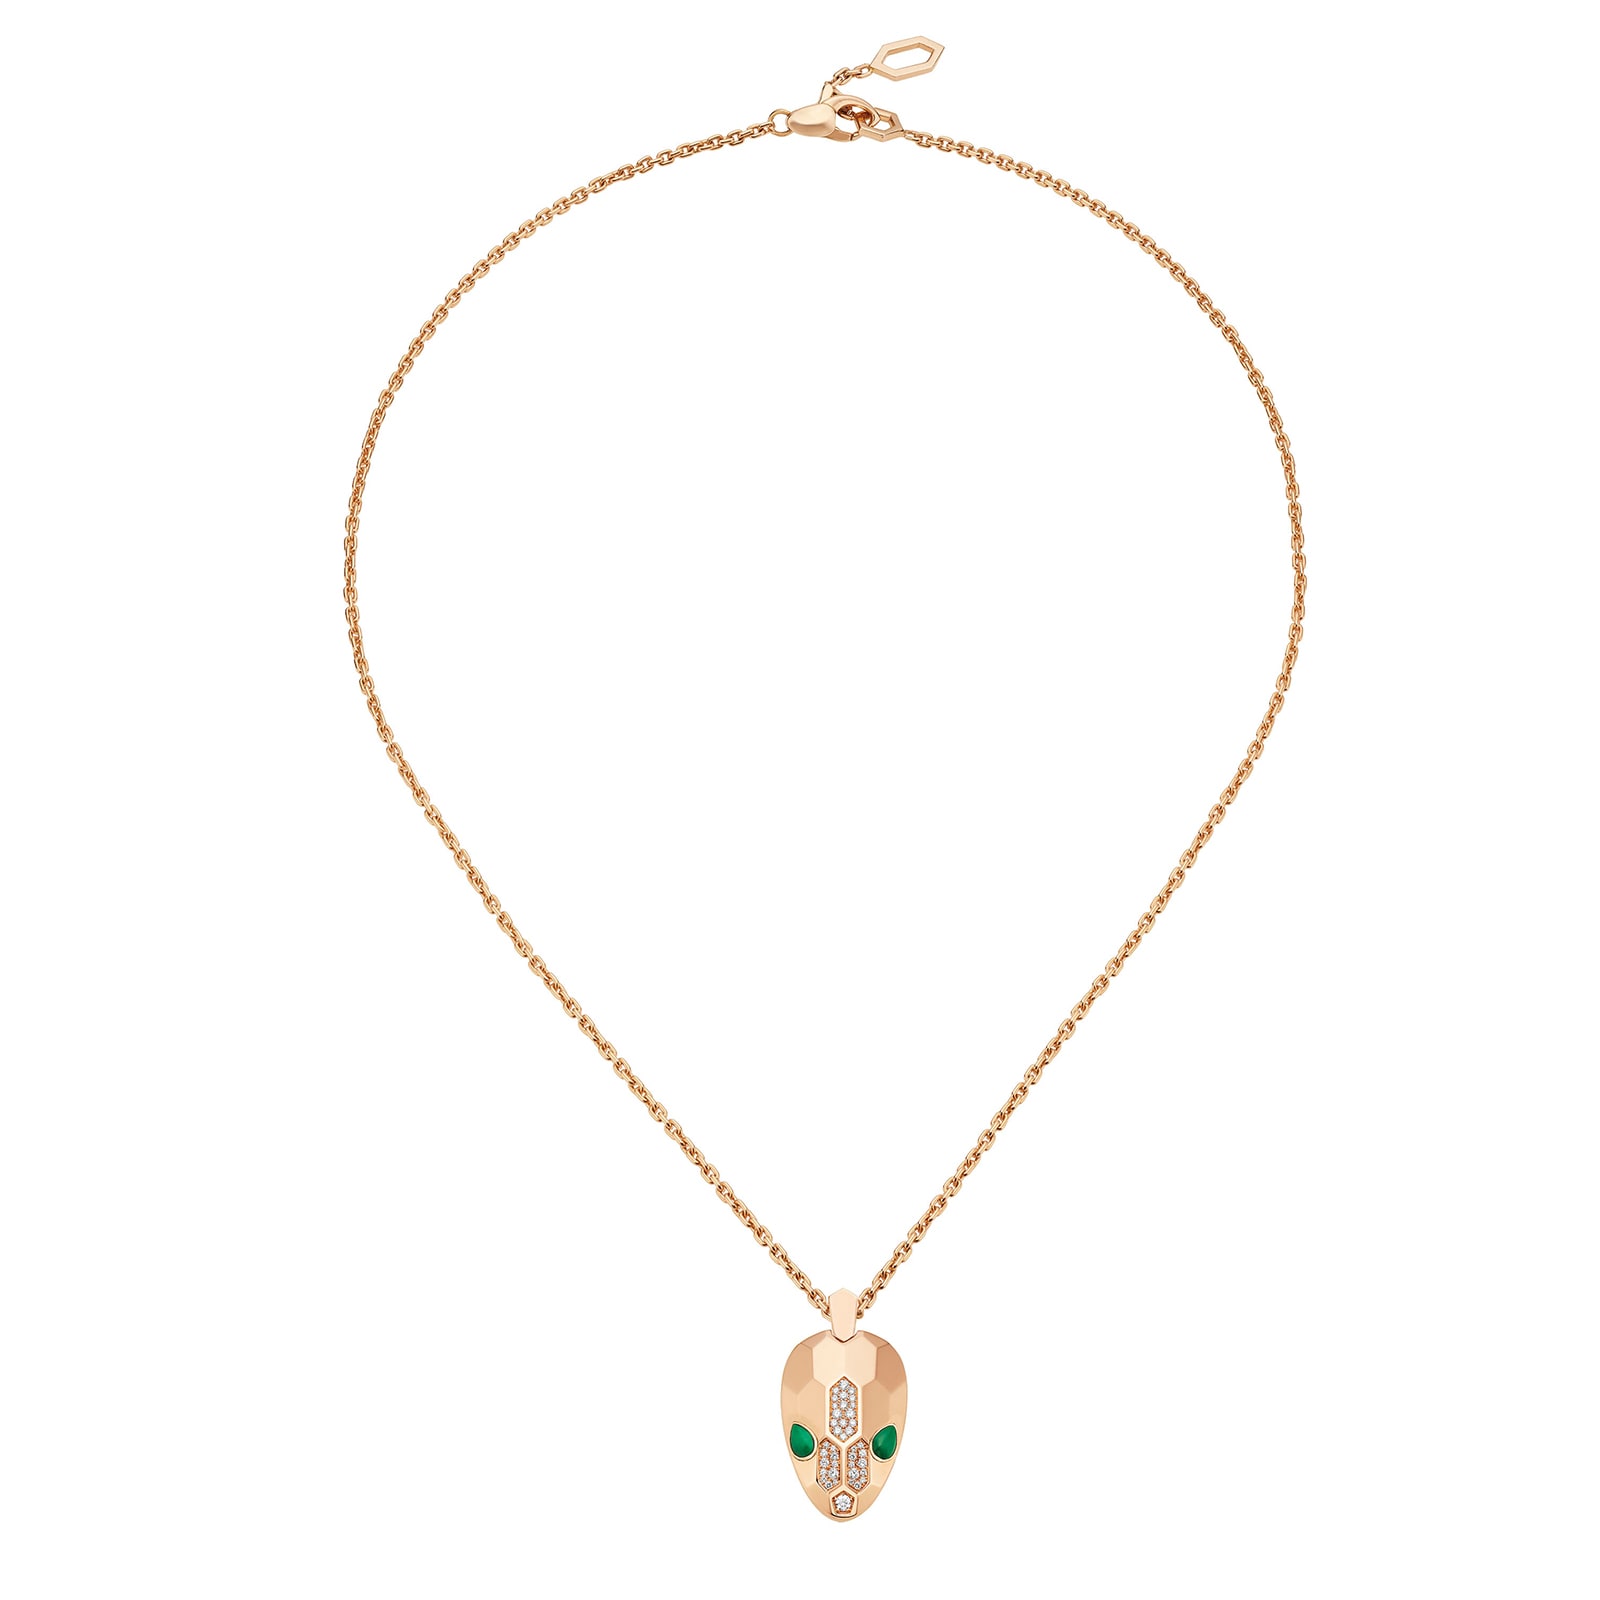 Bvlgari Jewelry 18k Rose Gold Serpenti 0.21cttw Diamond and Malachite  Necklace - 16-17 Inch